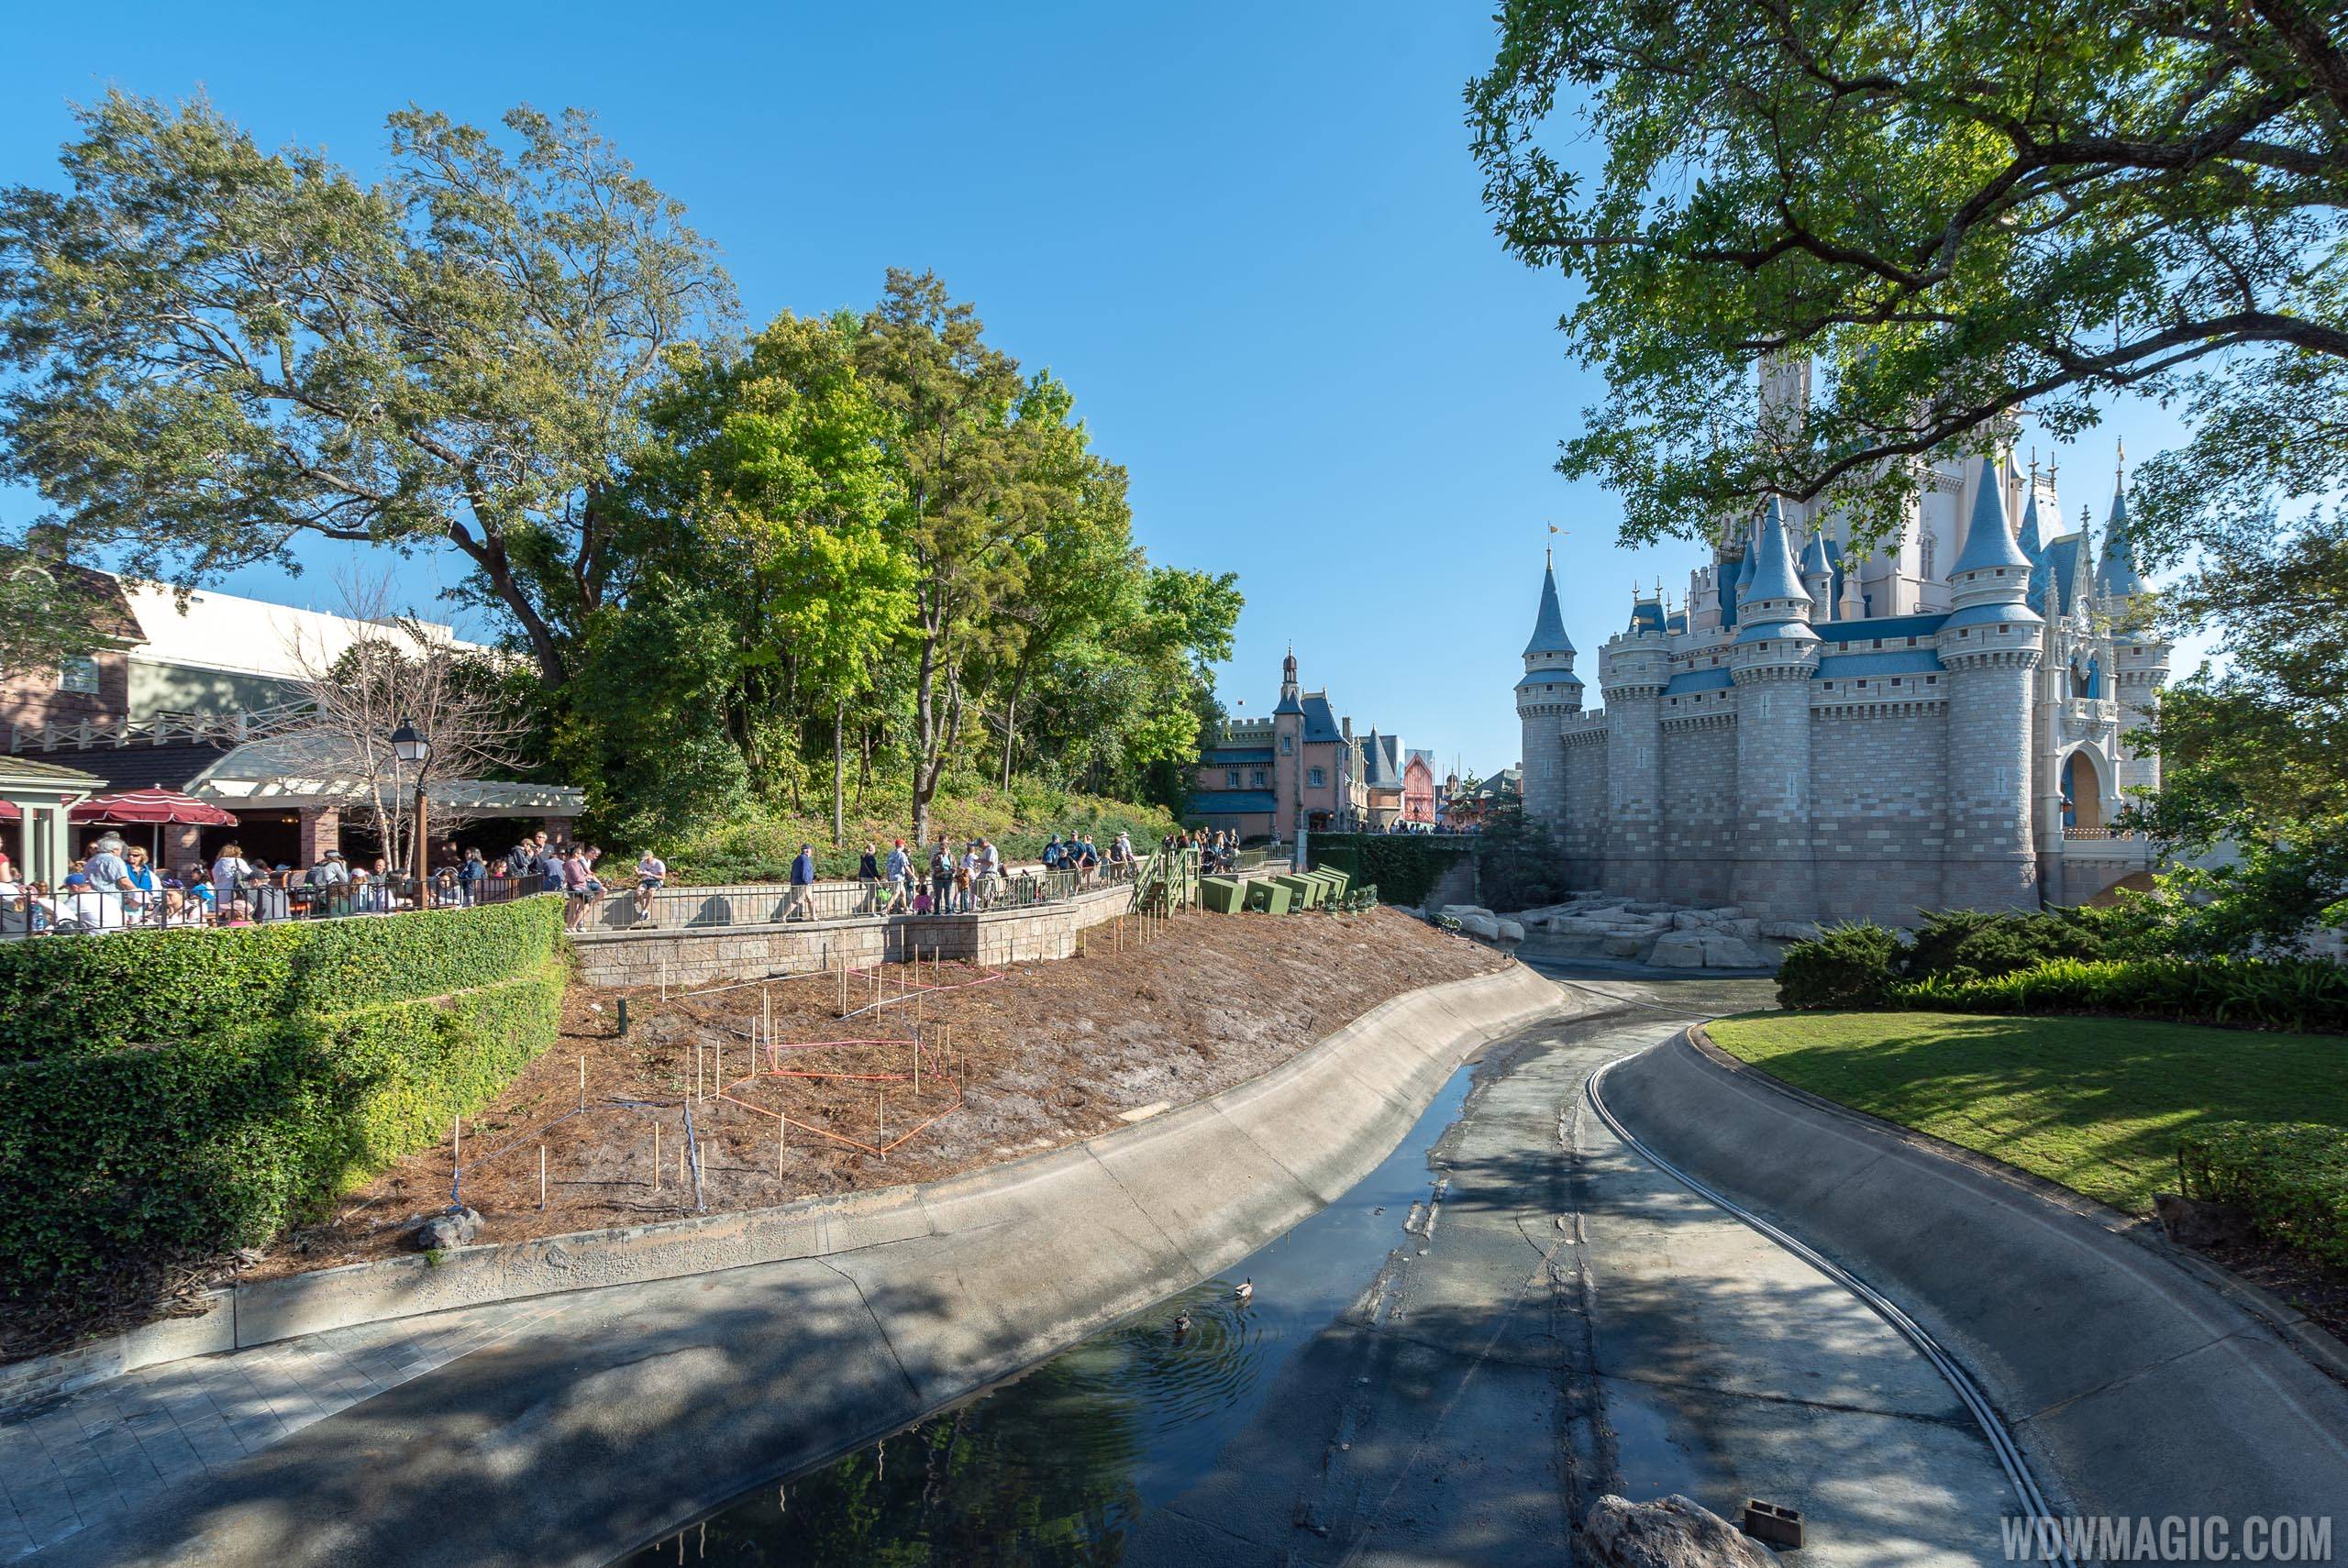 PHOTOS - Waterway around Cinderella Castle drained for walkway widening construction